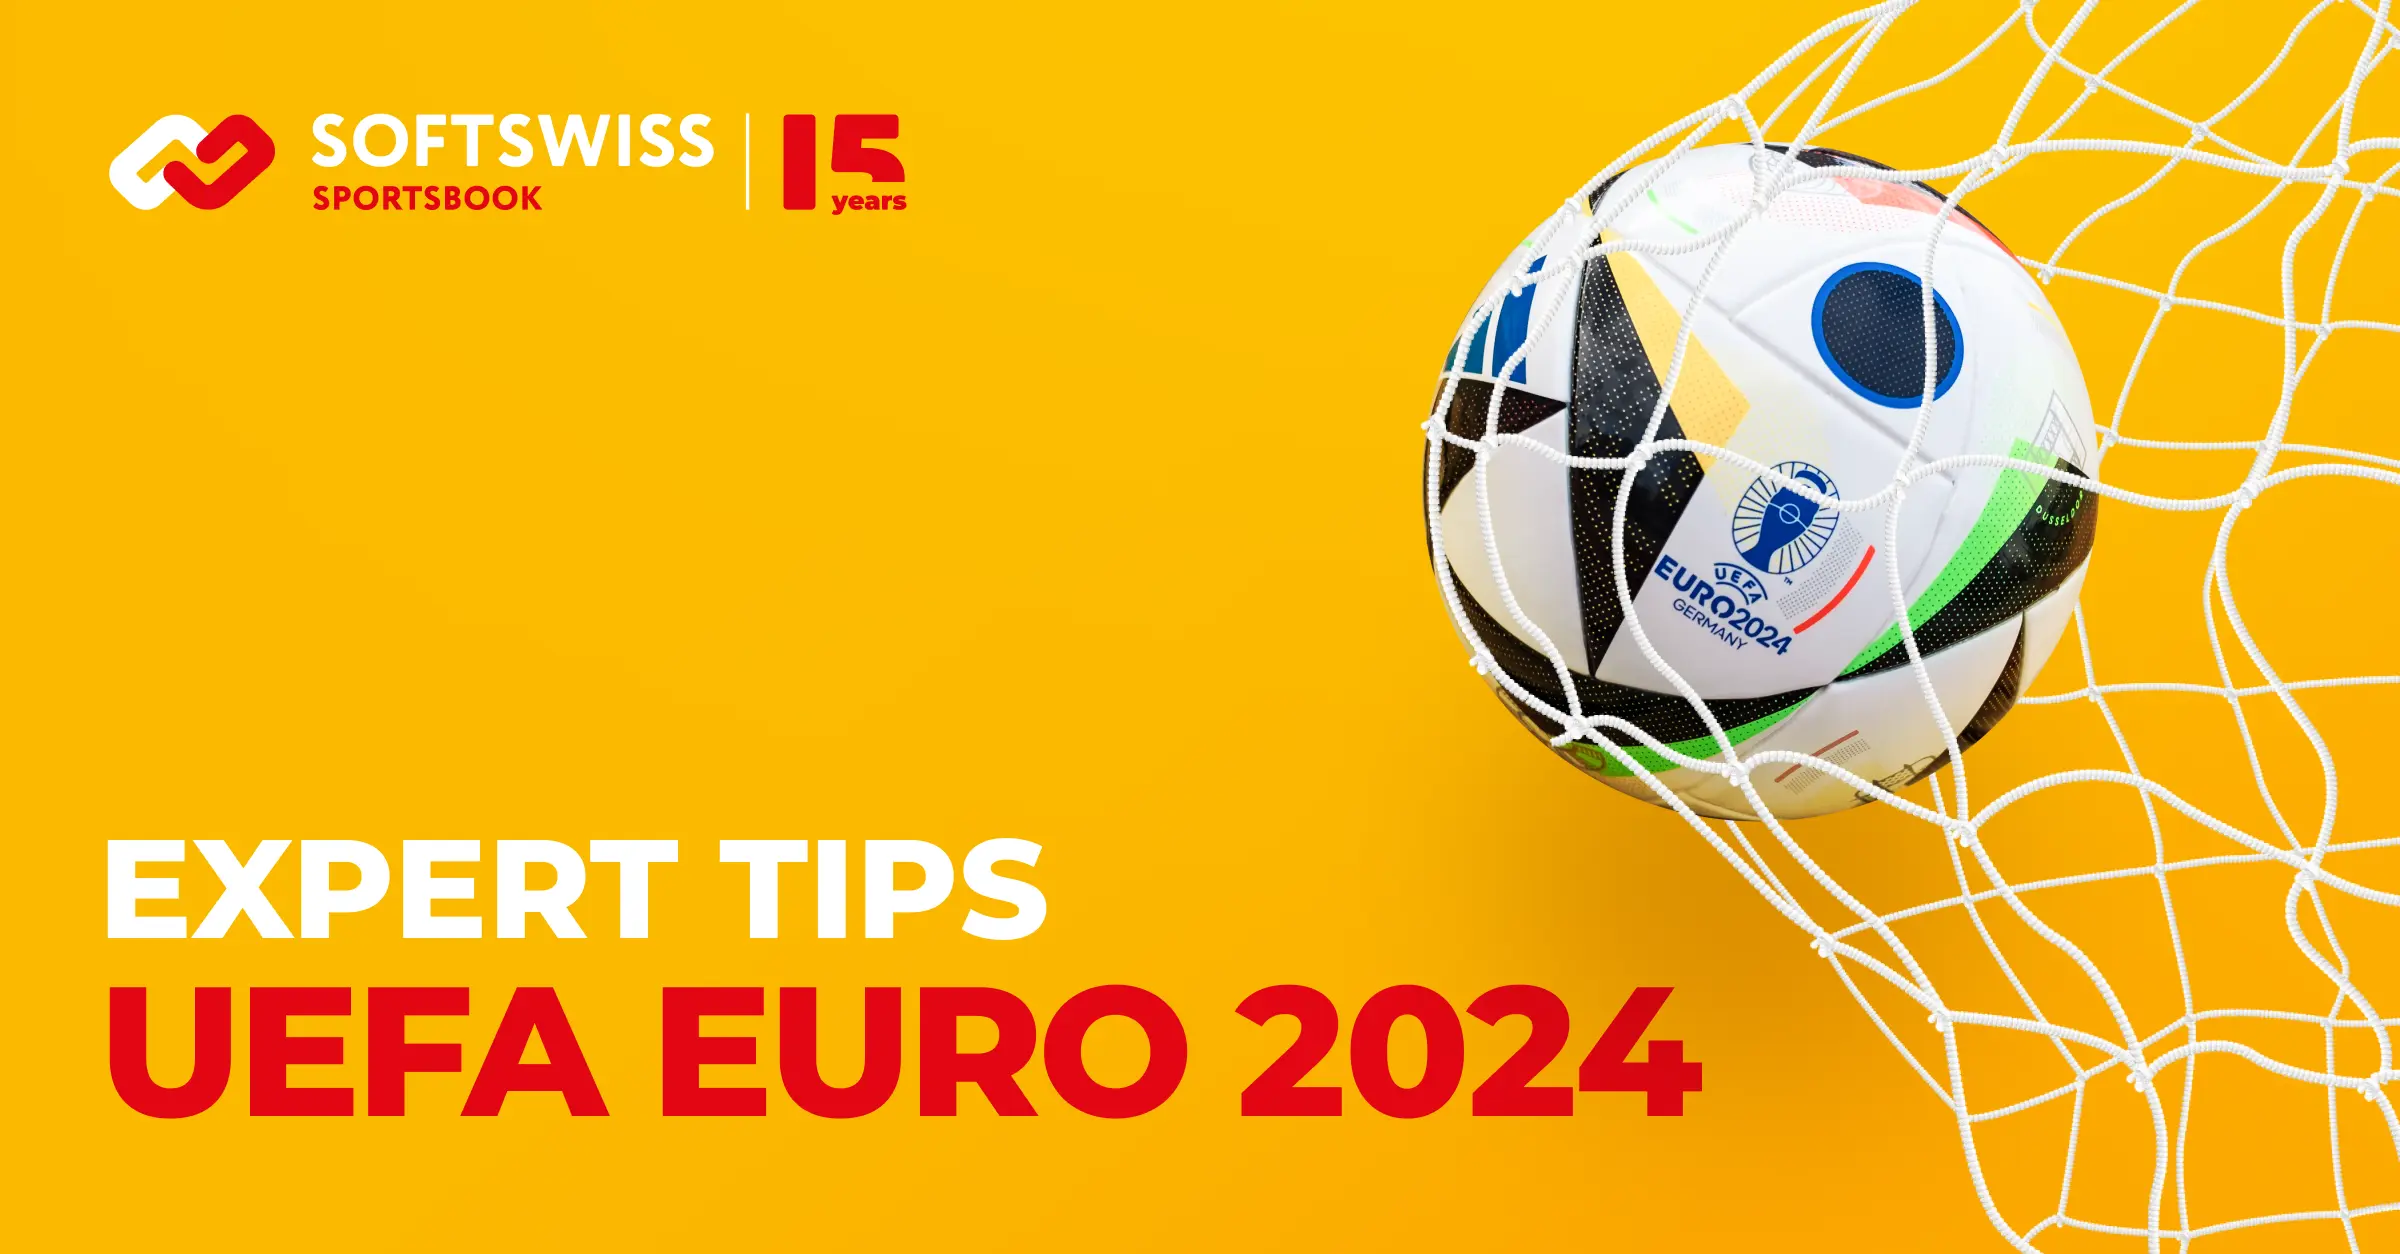 SOFTSWISS Sportsbook Shares Tips for Maximising UEFA EURO 2024 Profits 